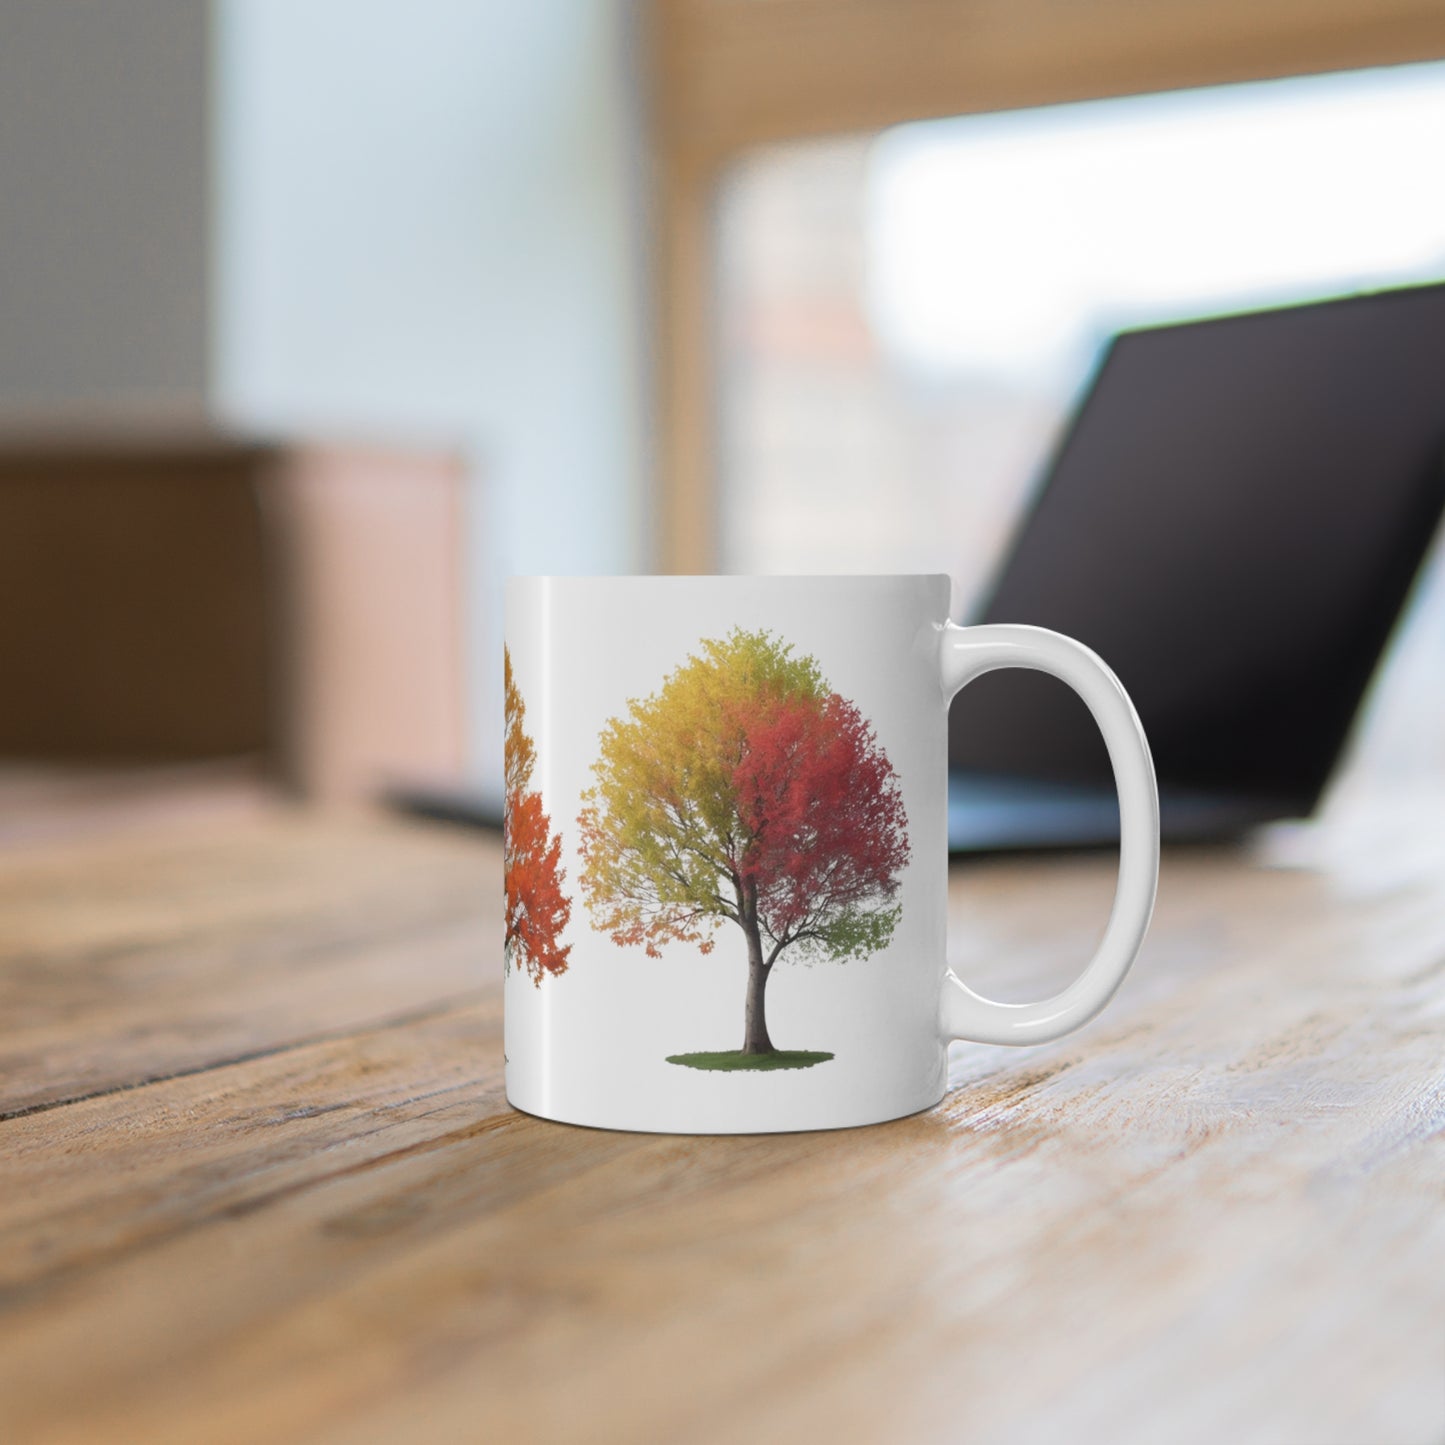 Colourful Trees Mug - Ceramic Coffee Mug 11oz